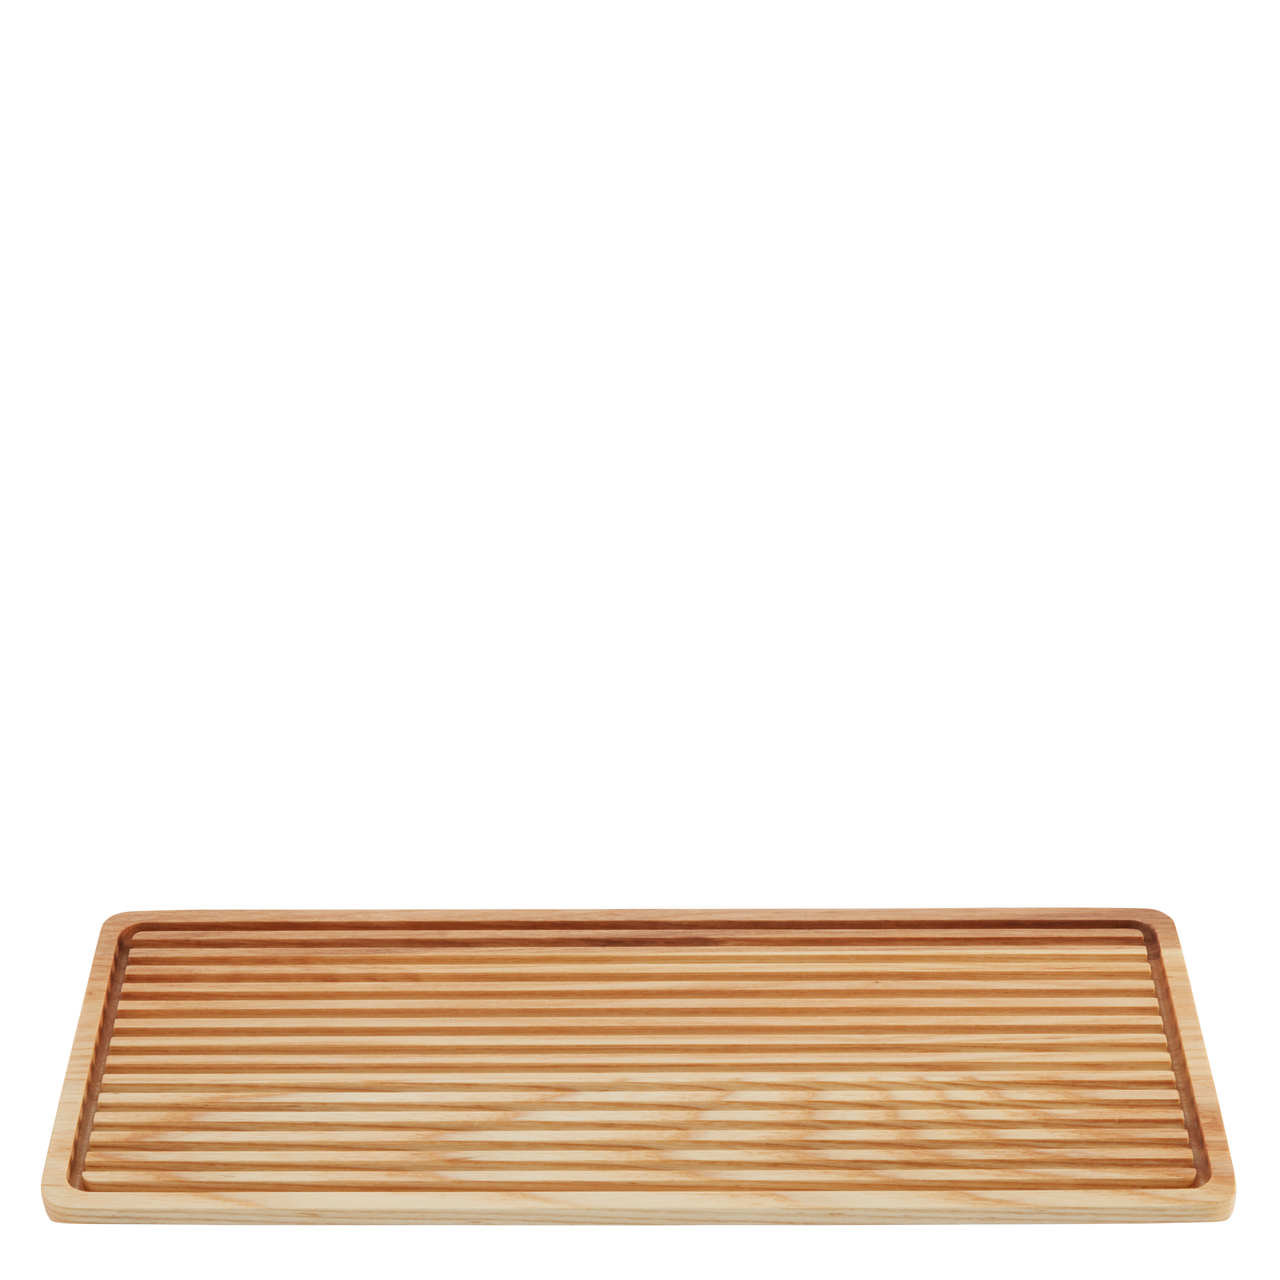 Breadboard wood (ashwood) rectangular 38